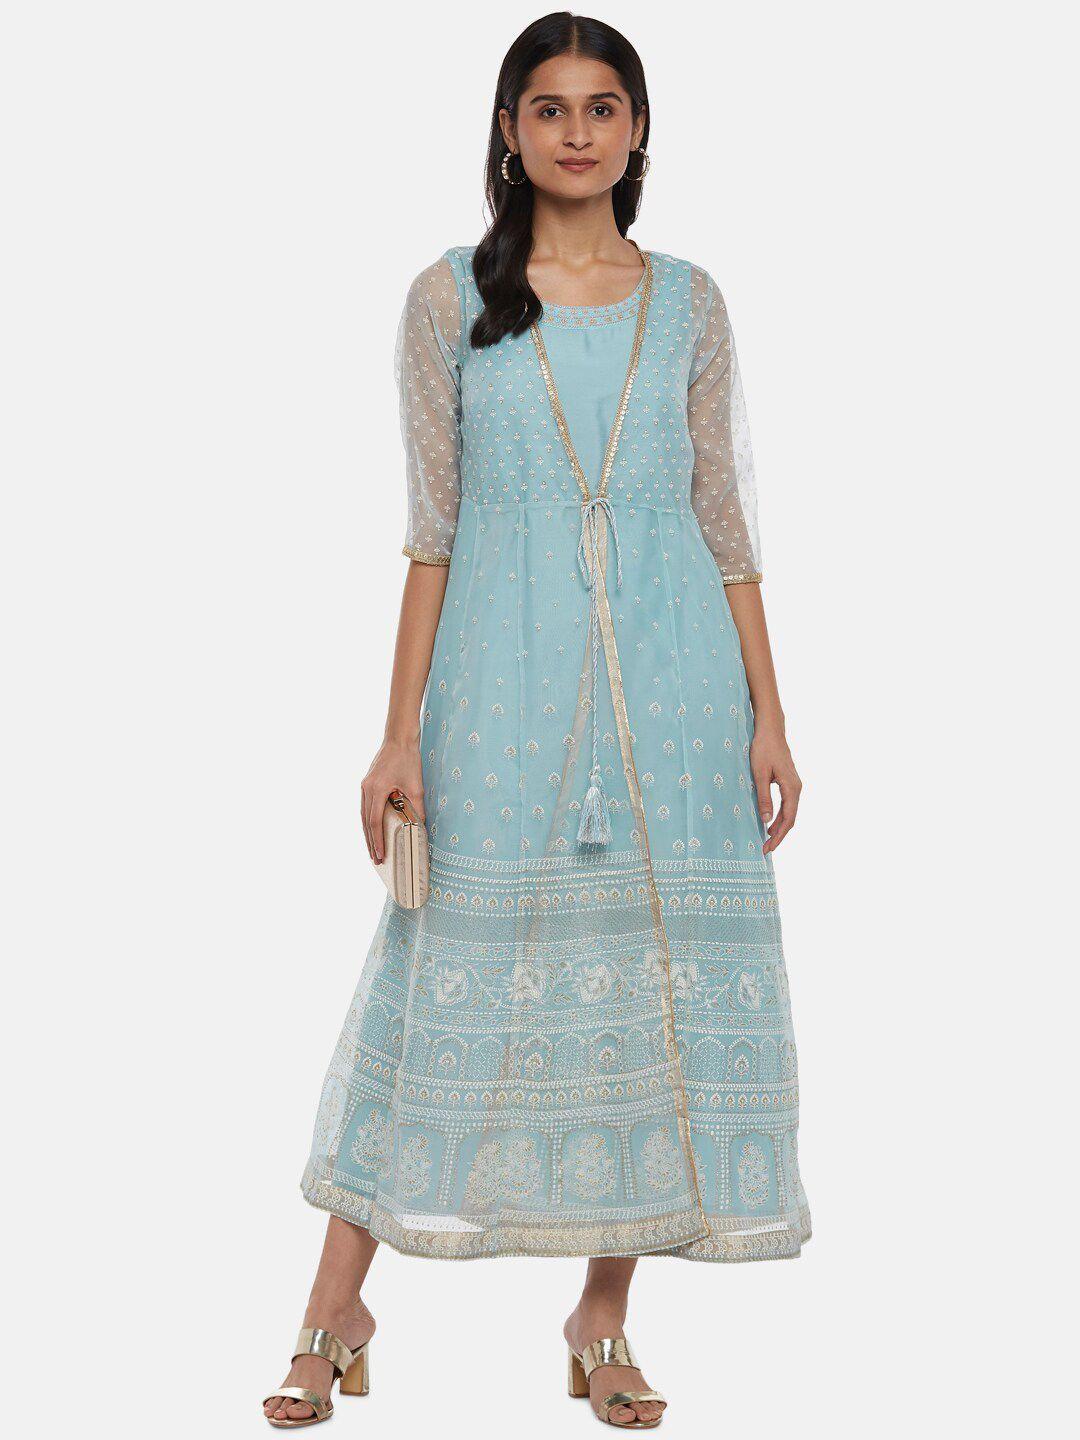 rangmanch by pantaloons blue net ethnic a-line maxi dress